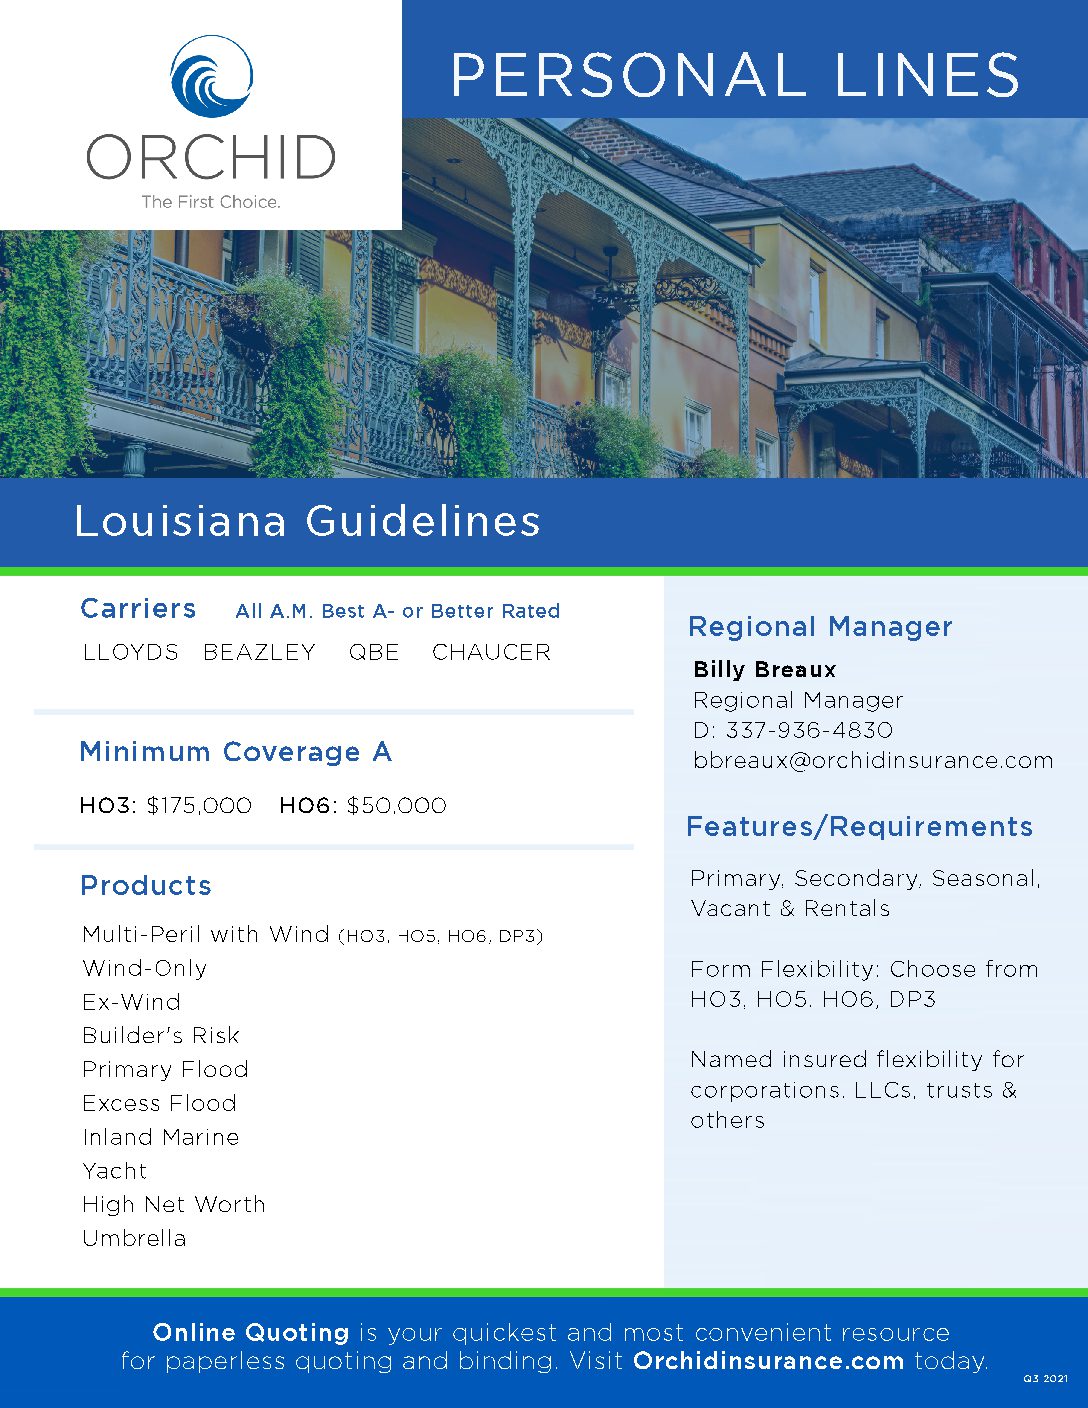 Louisiana Insurance Personal Lines